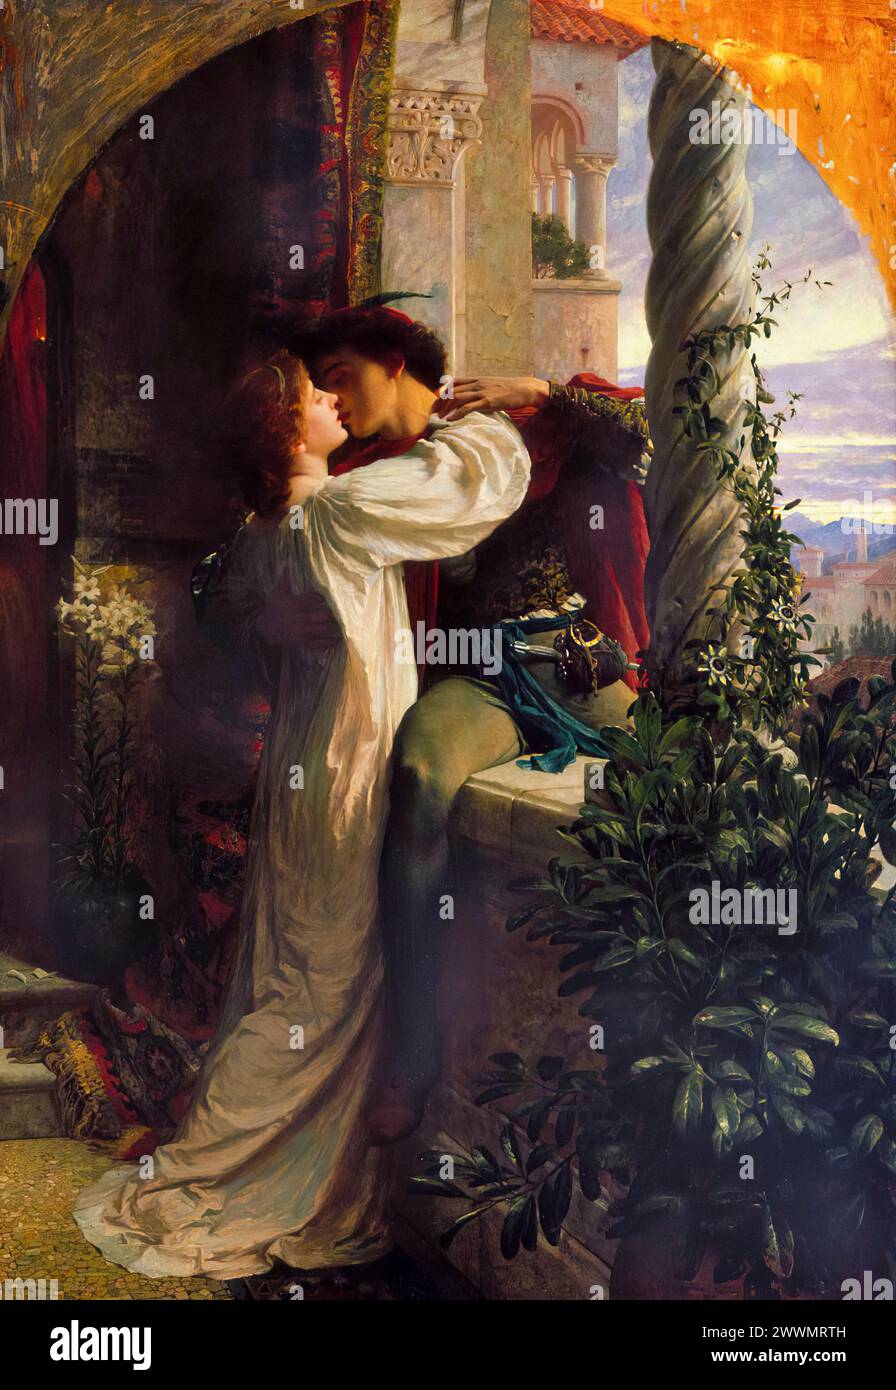 Romeo und Julia, Balkonszene, Ölgemälde auf Leinwand von Frank Dicksee, 1884 Stockfoto